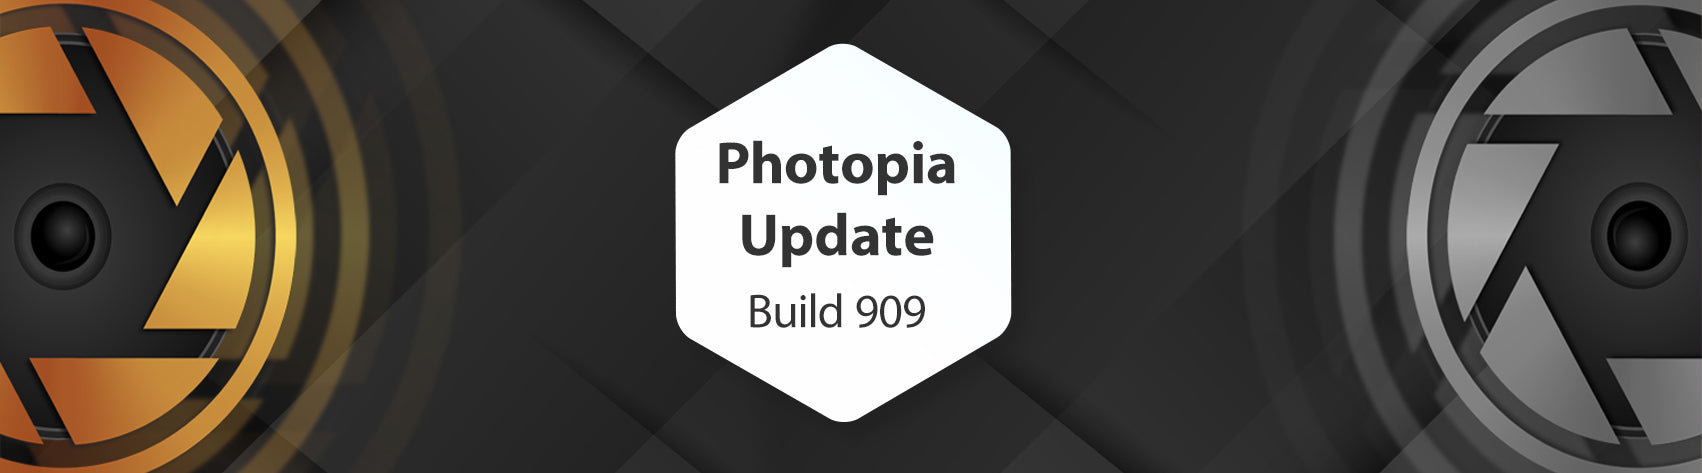 Photopia Update - Build 909